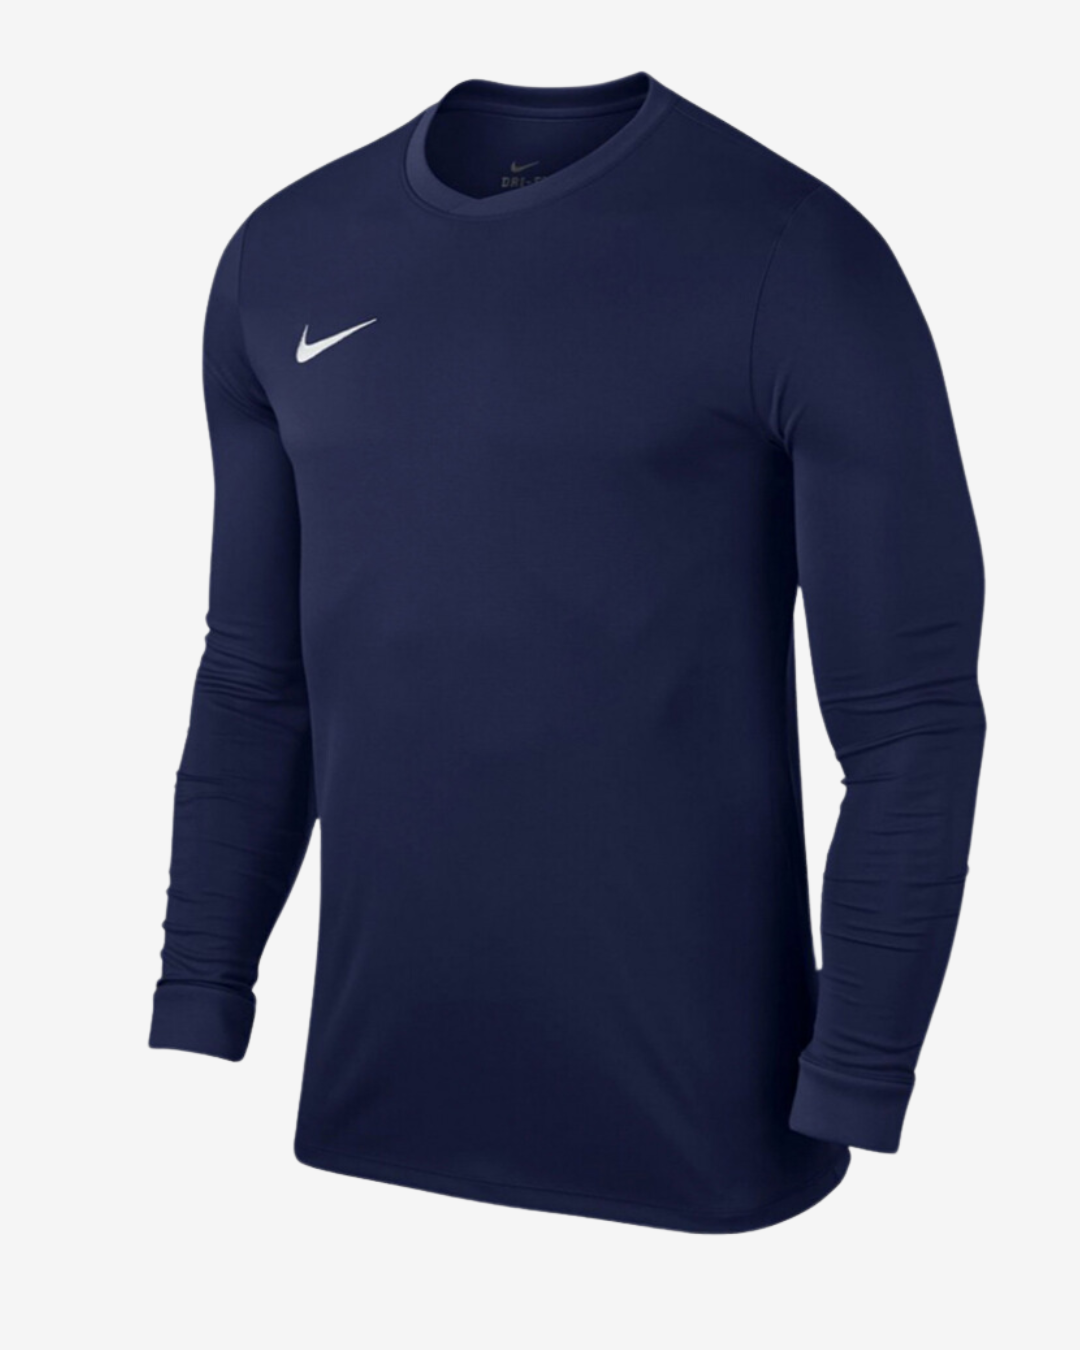 Nike Dri-fit park 7 langærmet t-shirt - Navy - Str. M - Modish.dk